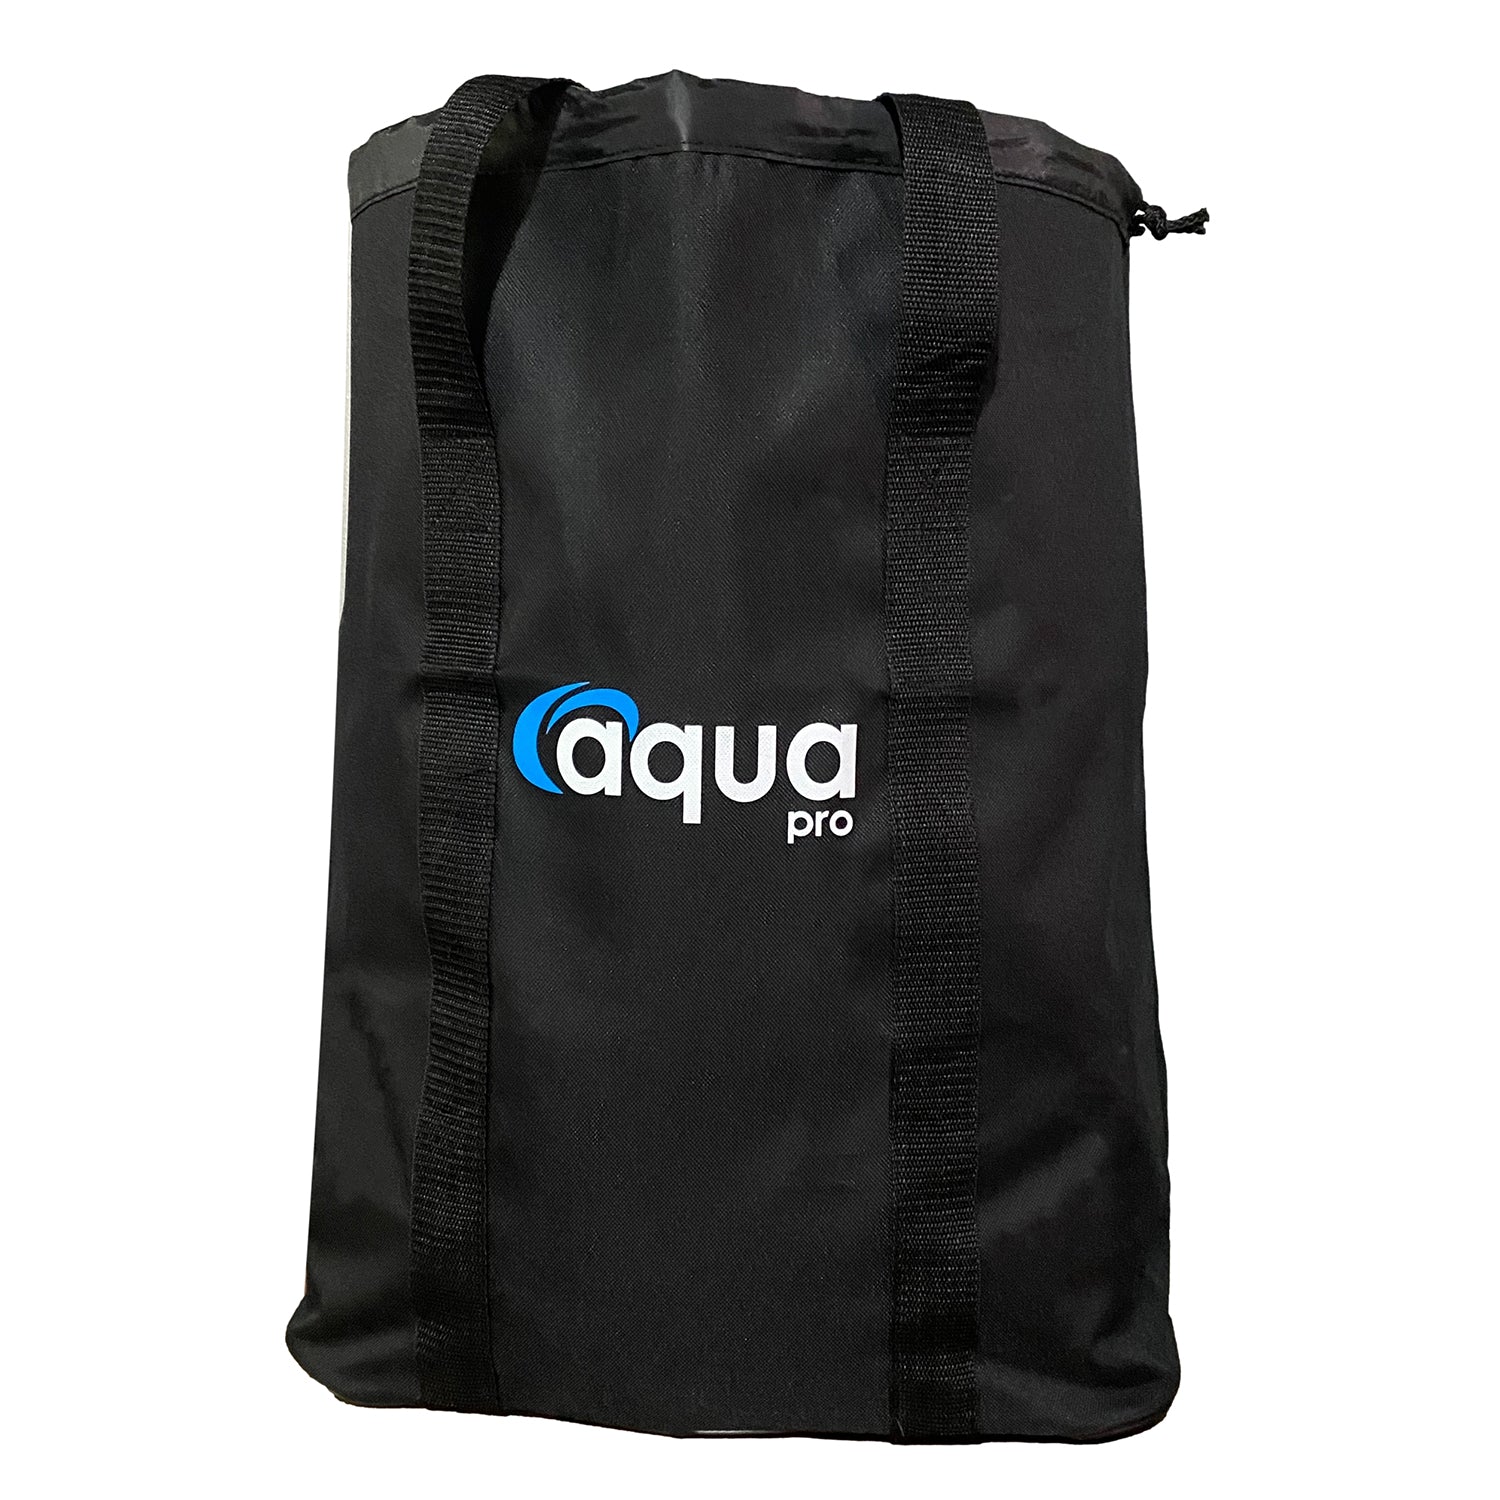 Aqua Pro Vac & Steamer Bundle Promotion - Free Accessory Bag